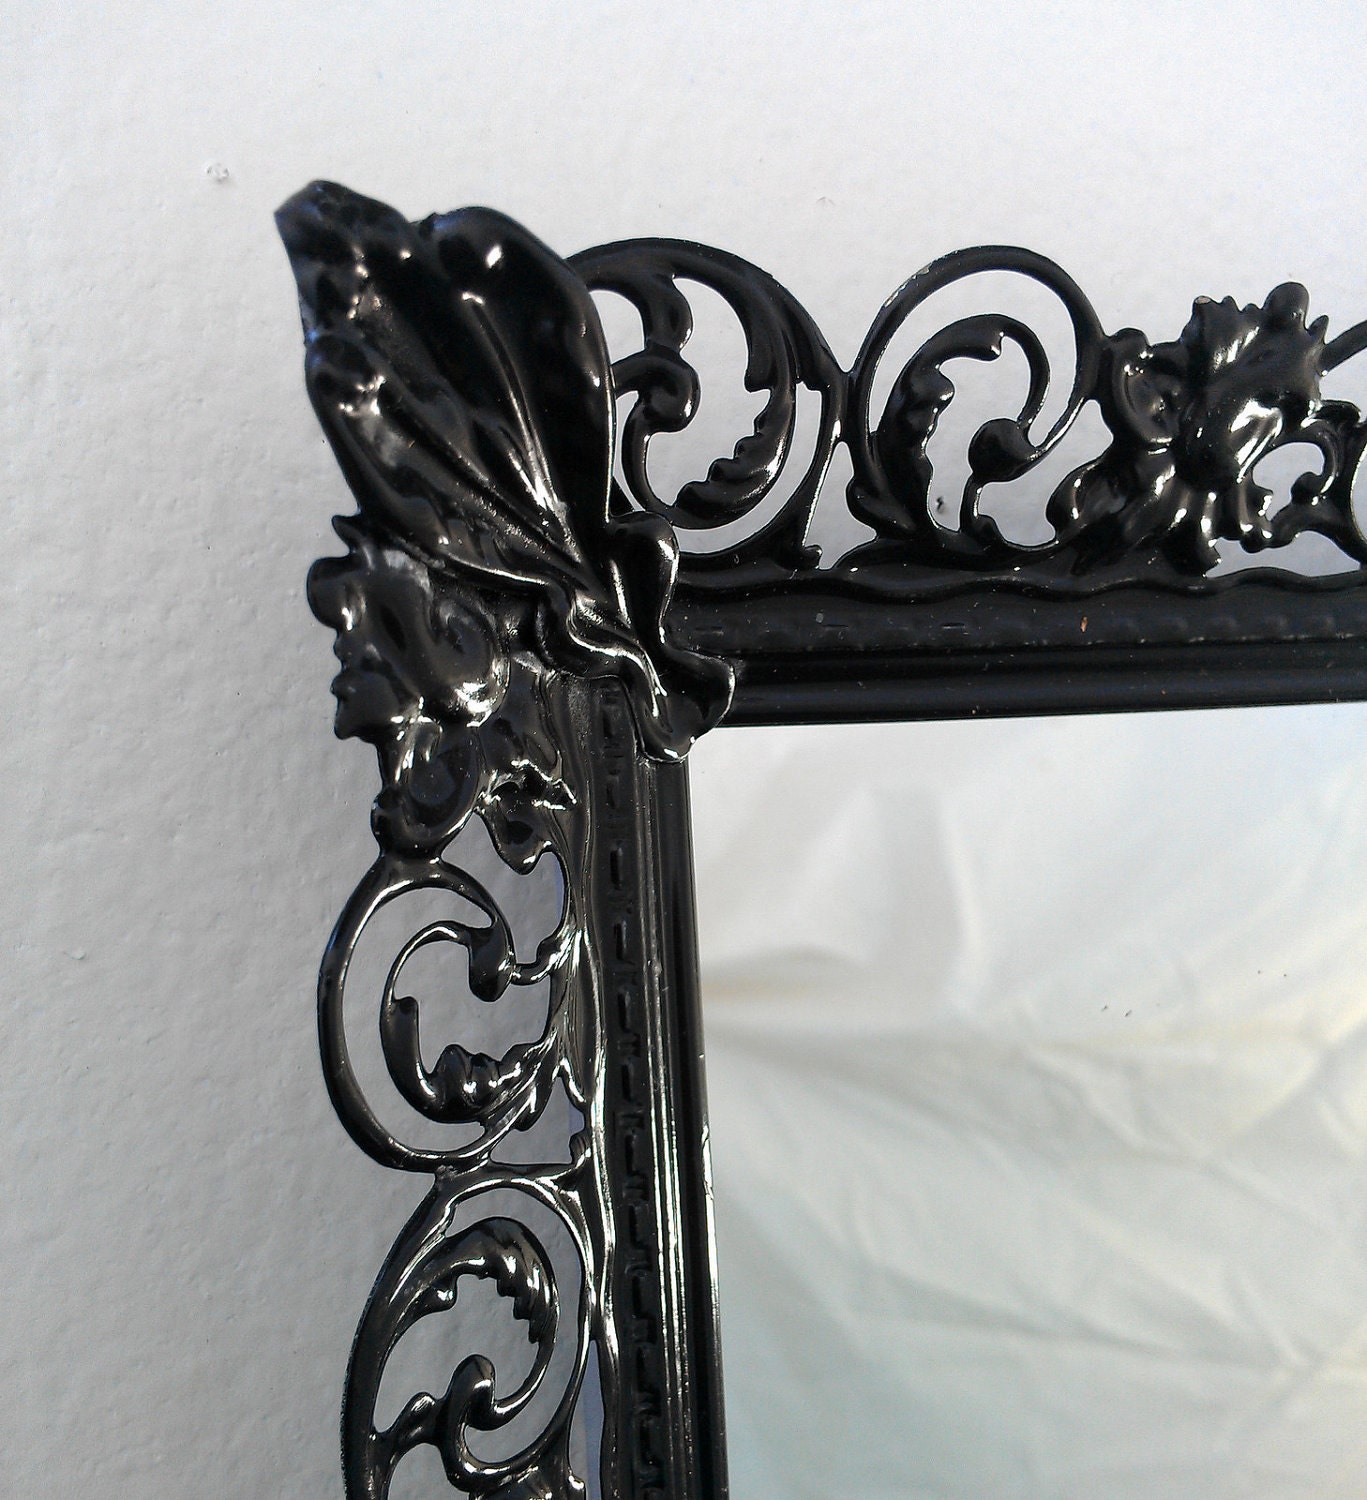 Ornate Black Mirror